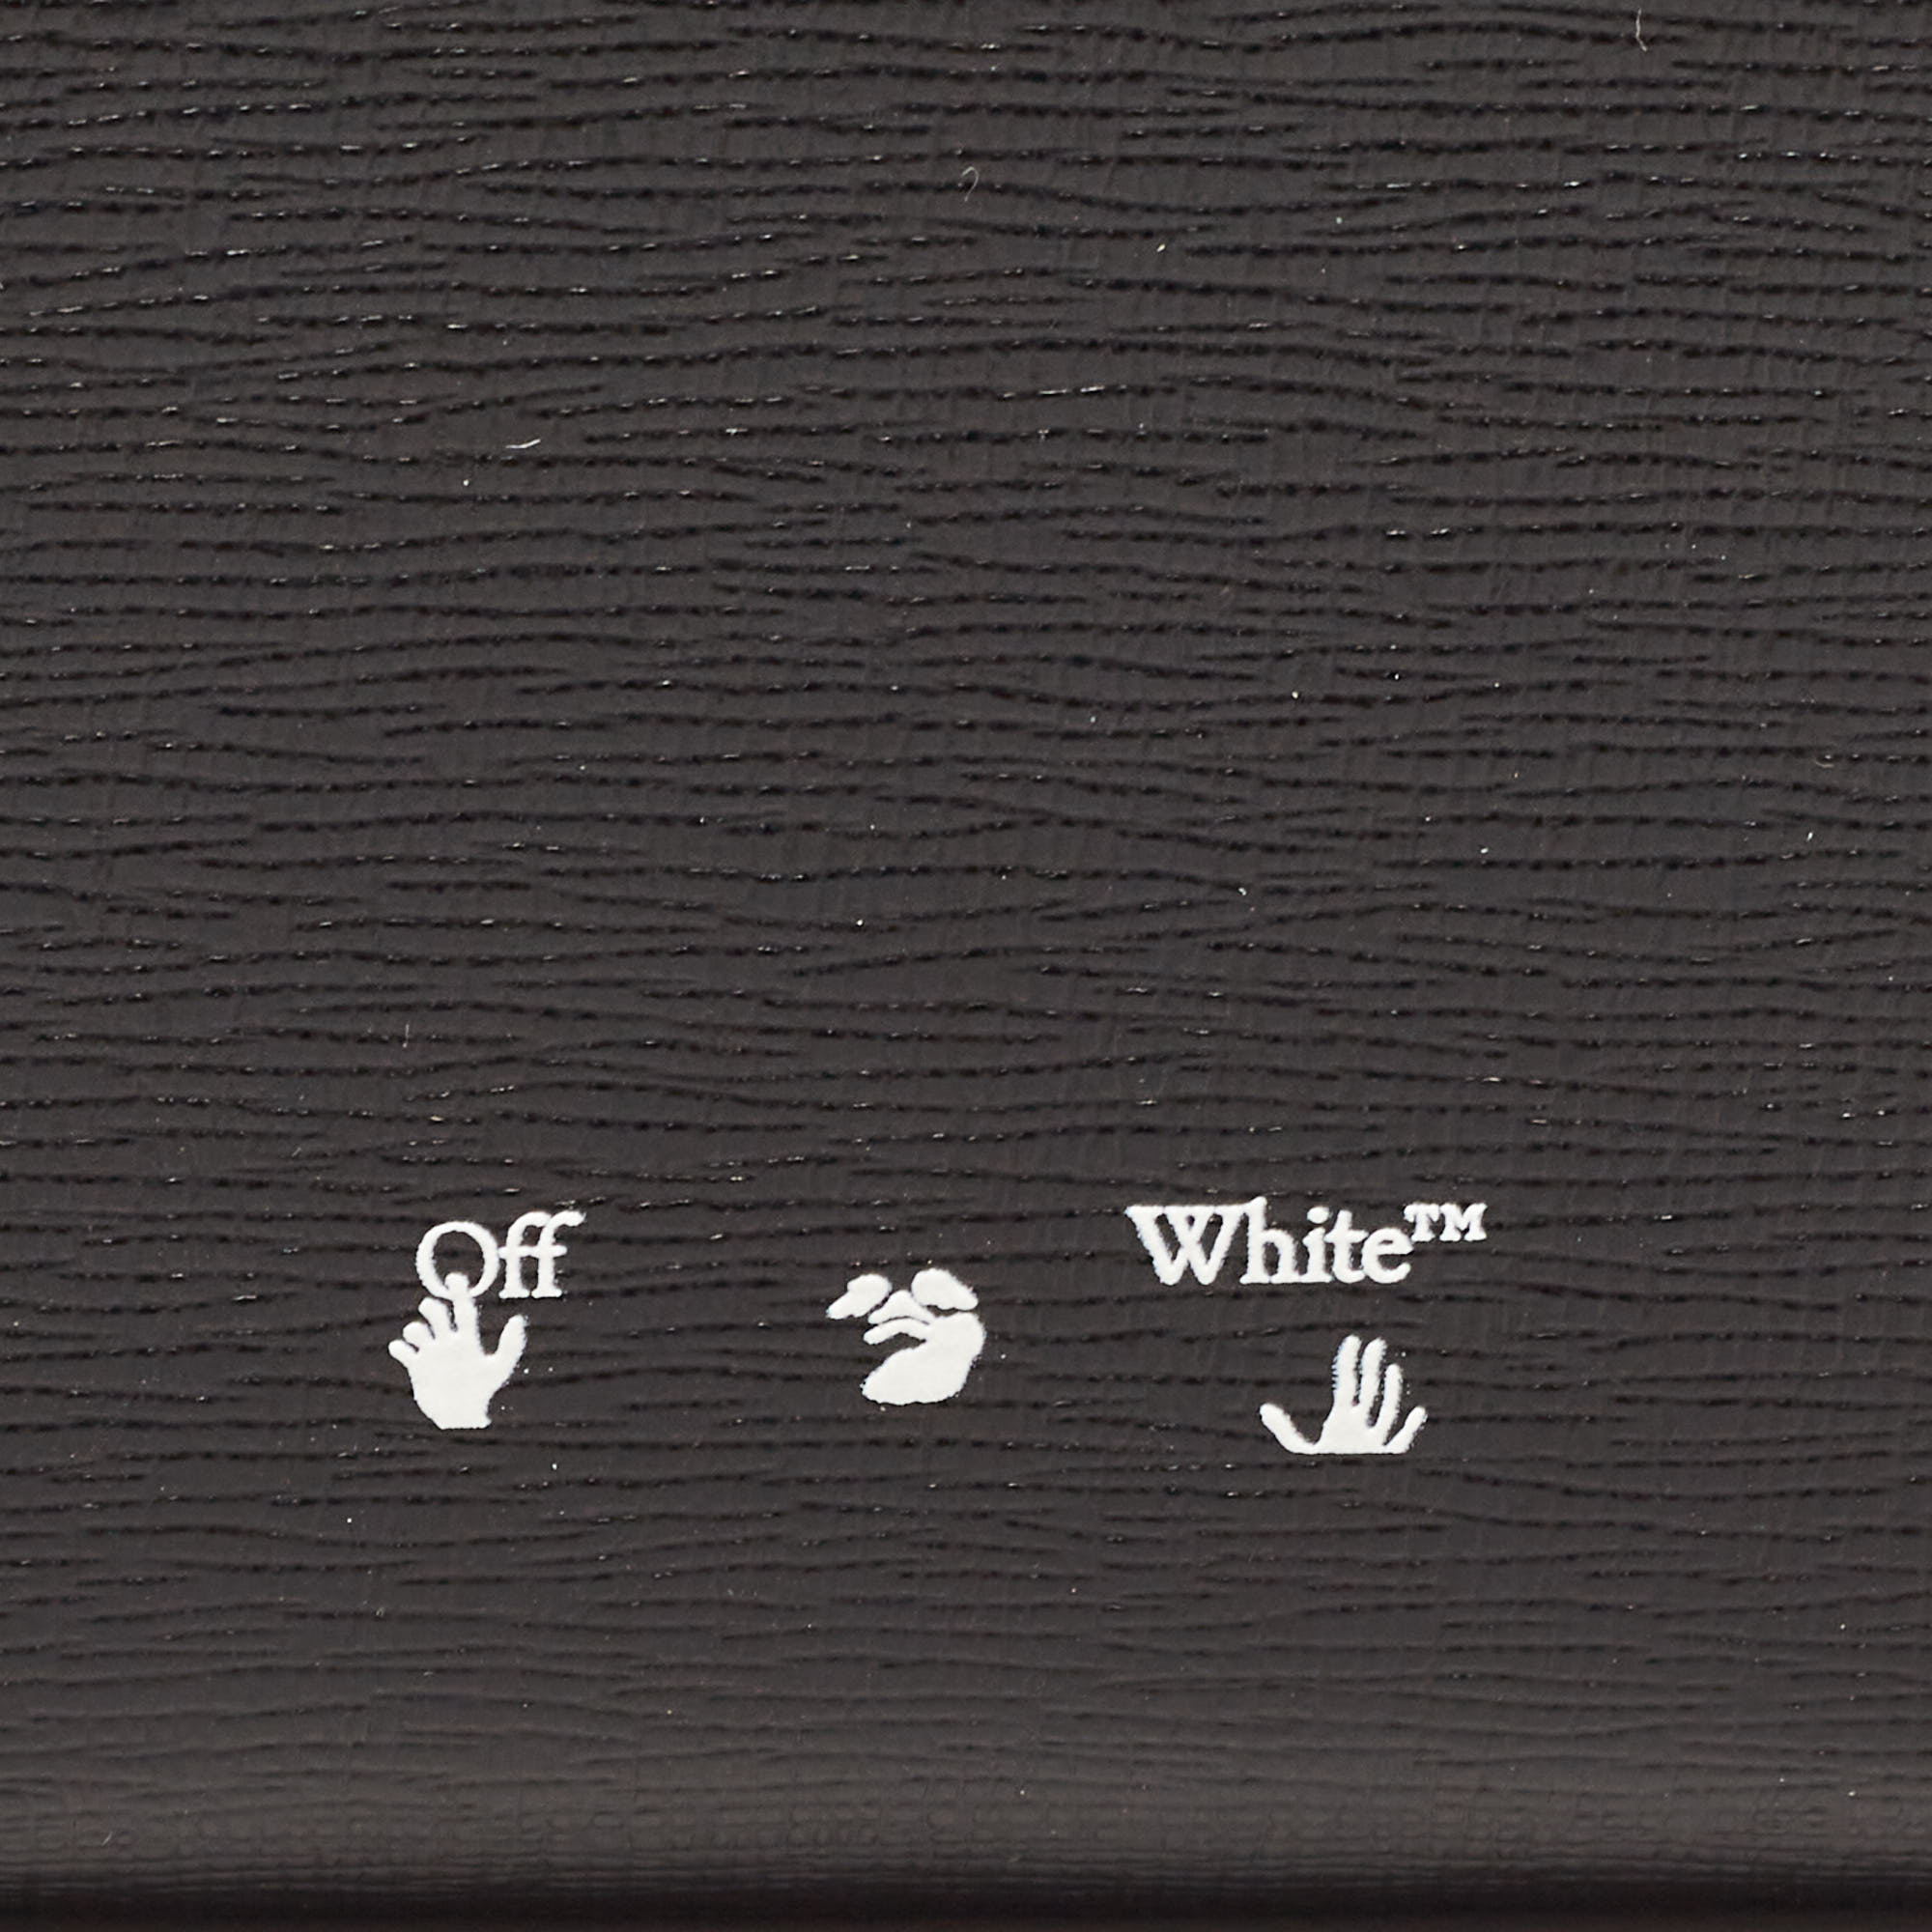 Off-White Black/White Diagonal Print Leather Binder Clip Compact Wallet